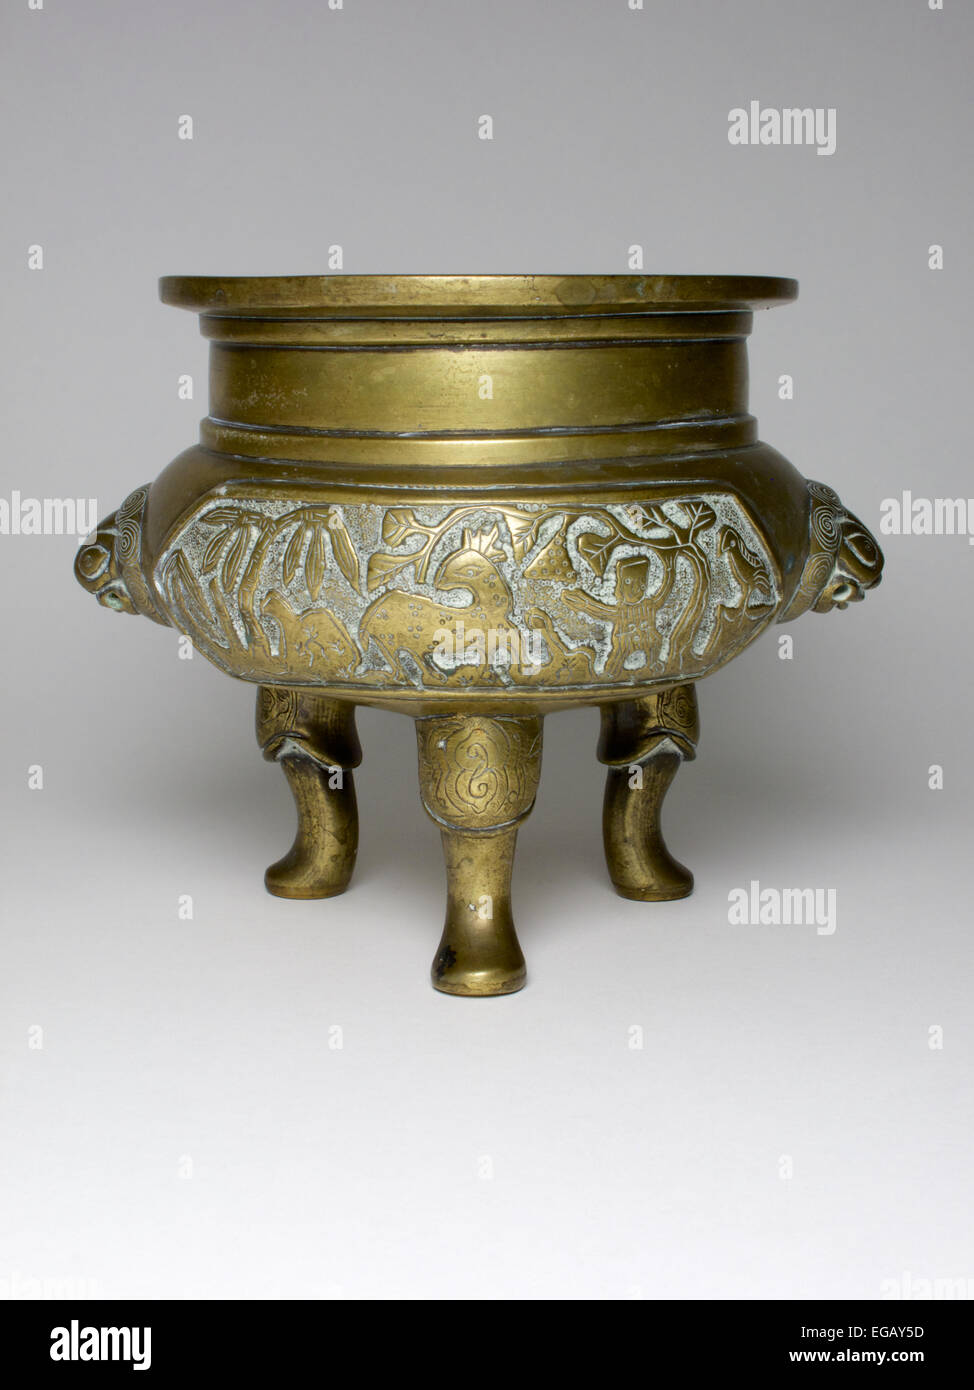 Antique 18th/19th century Chinese tripod bronze censer. Stock Photo